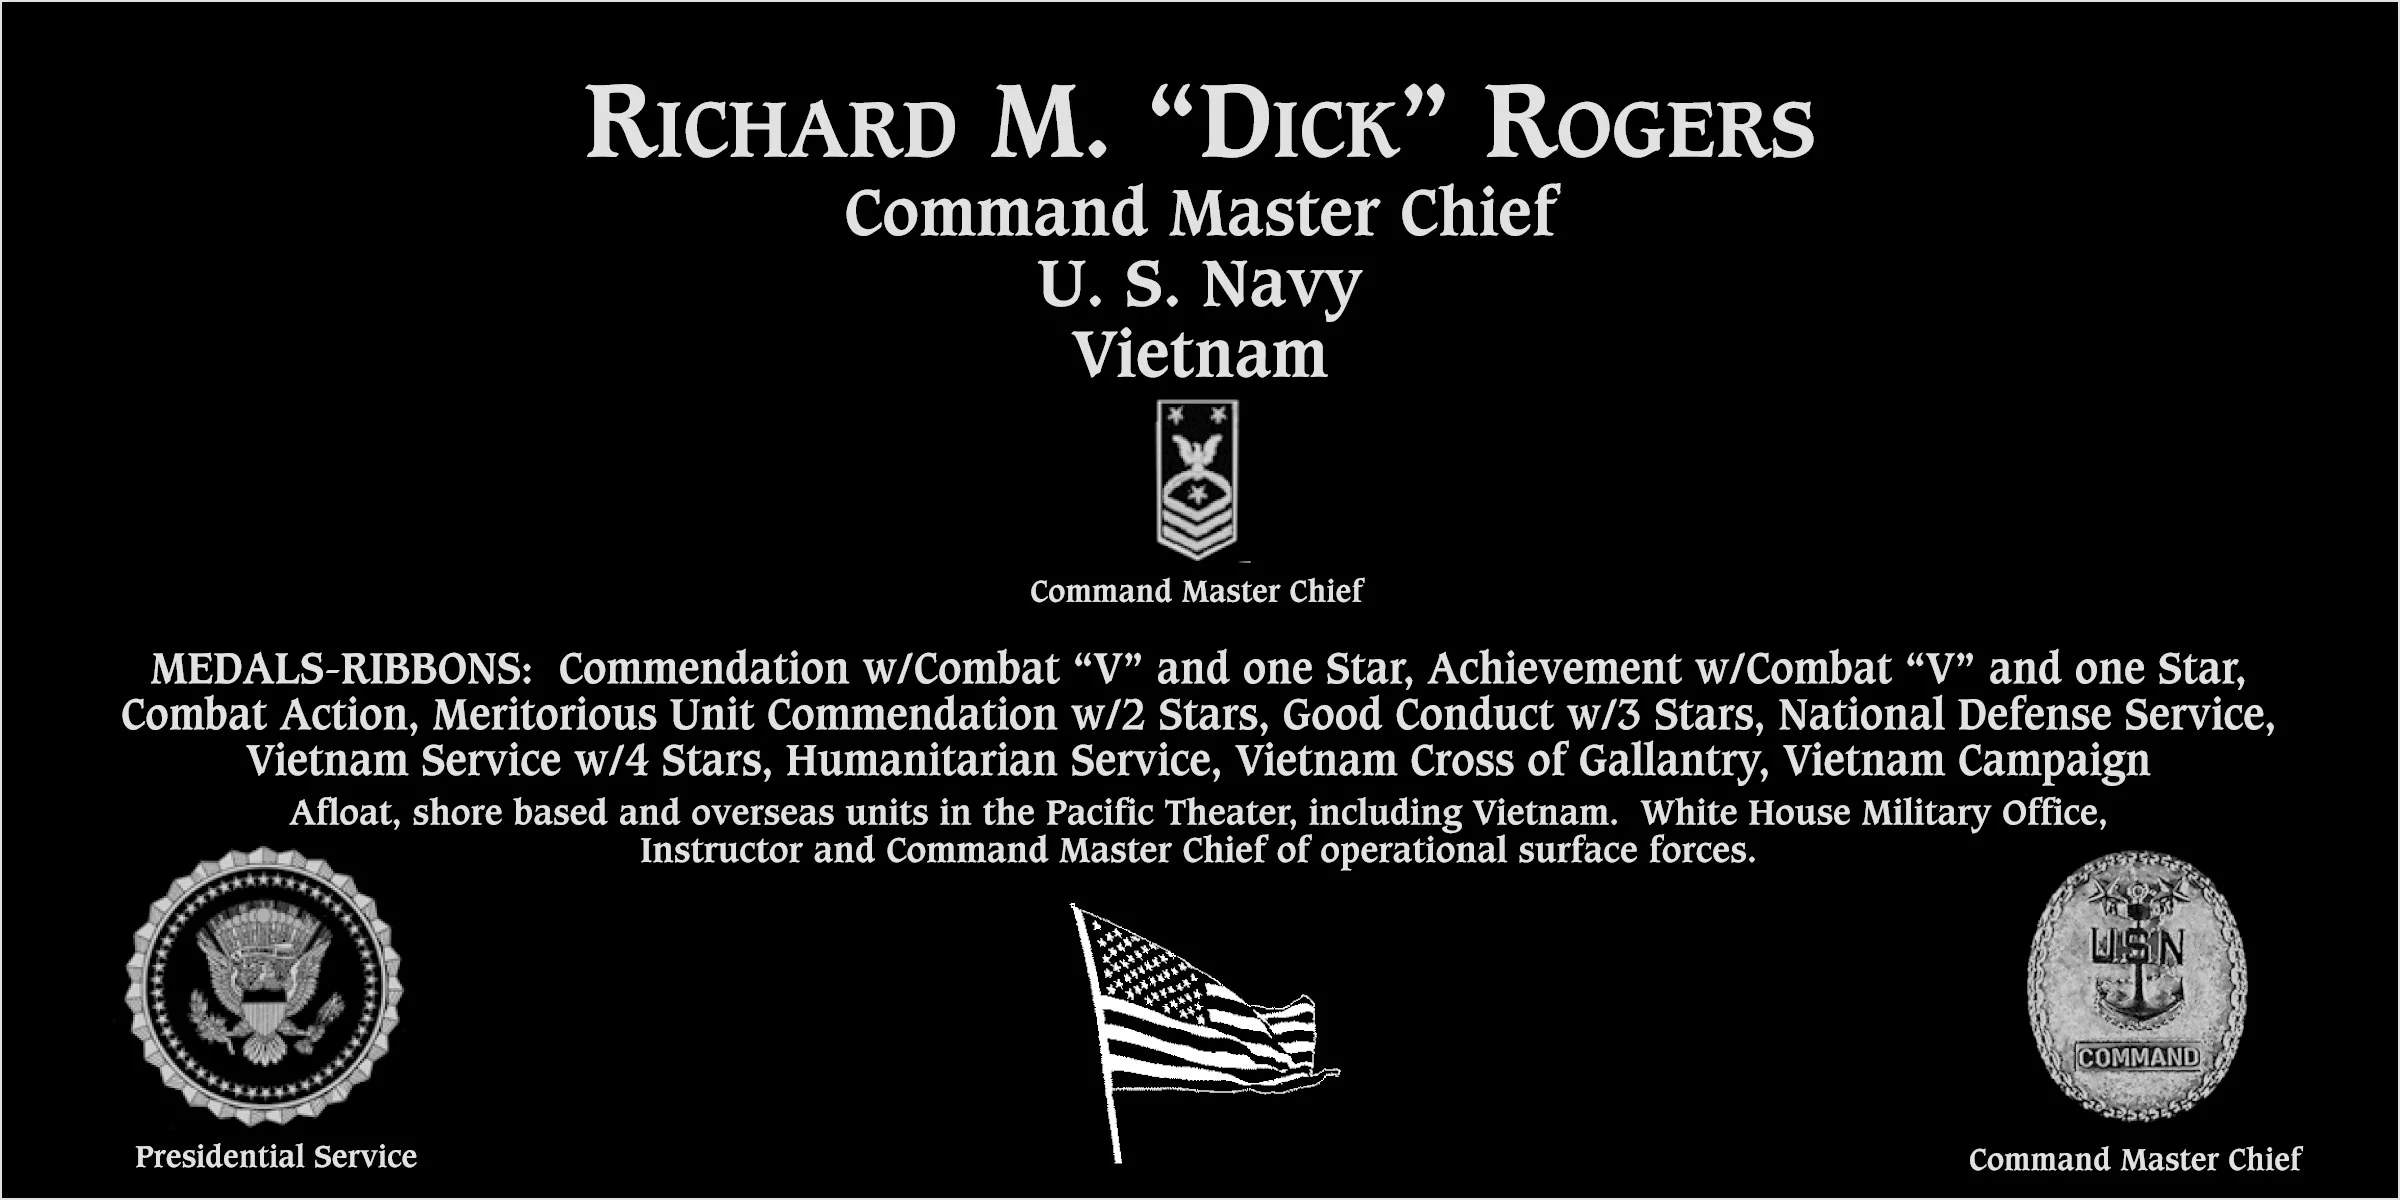 Richard M “Dick” Rogers